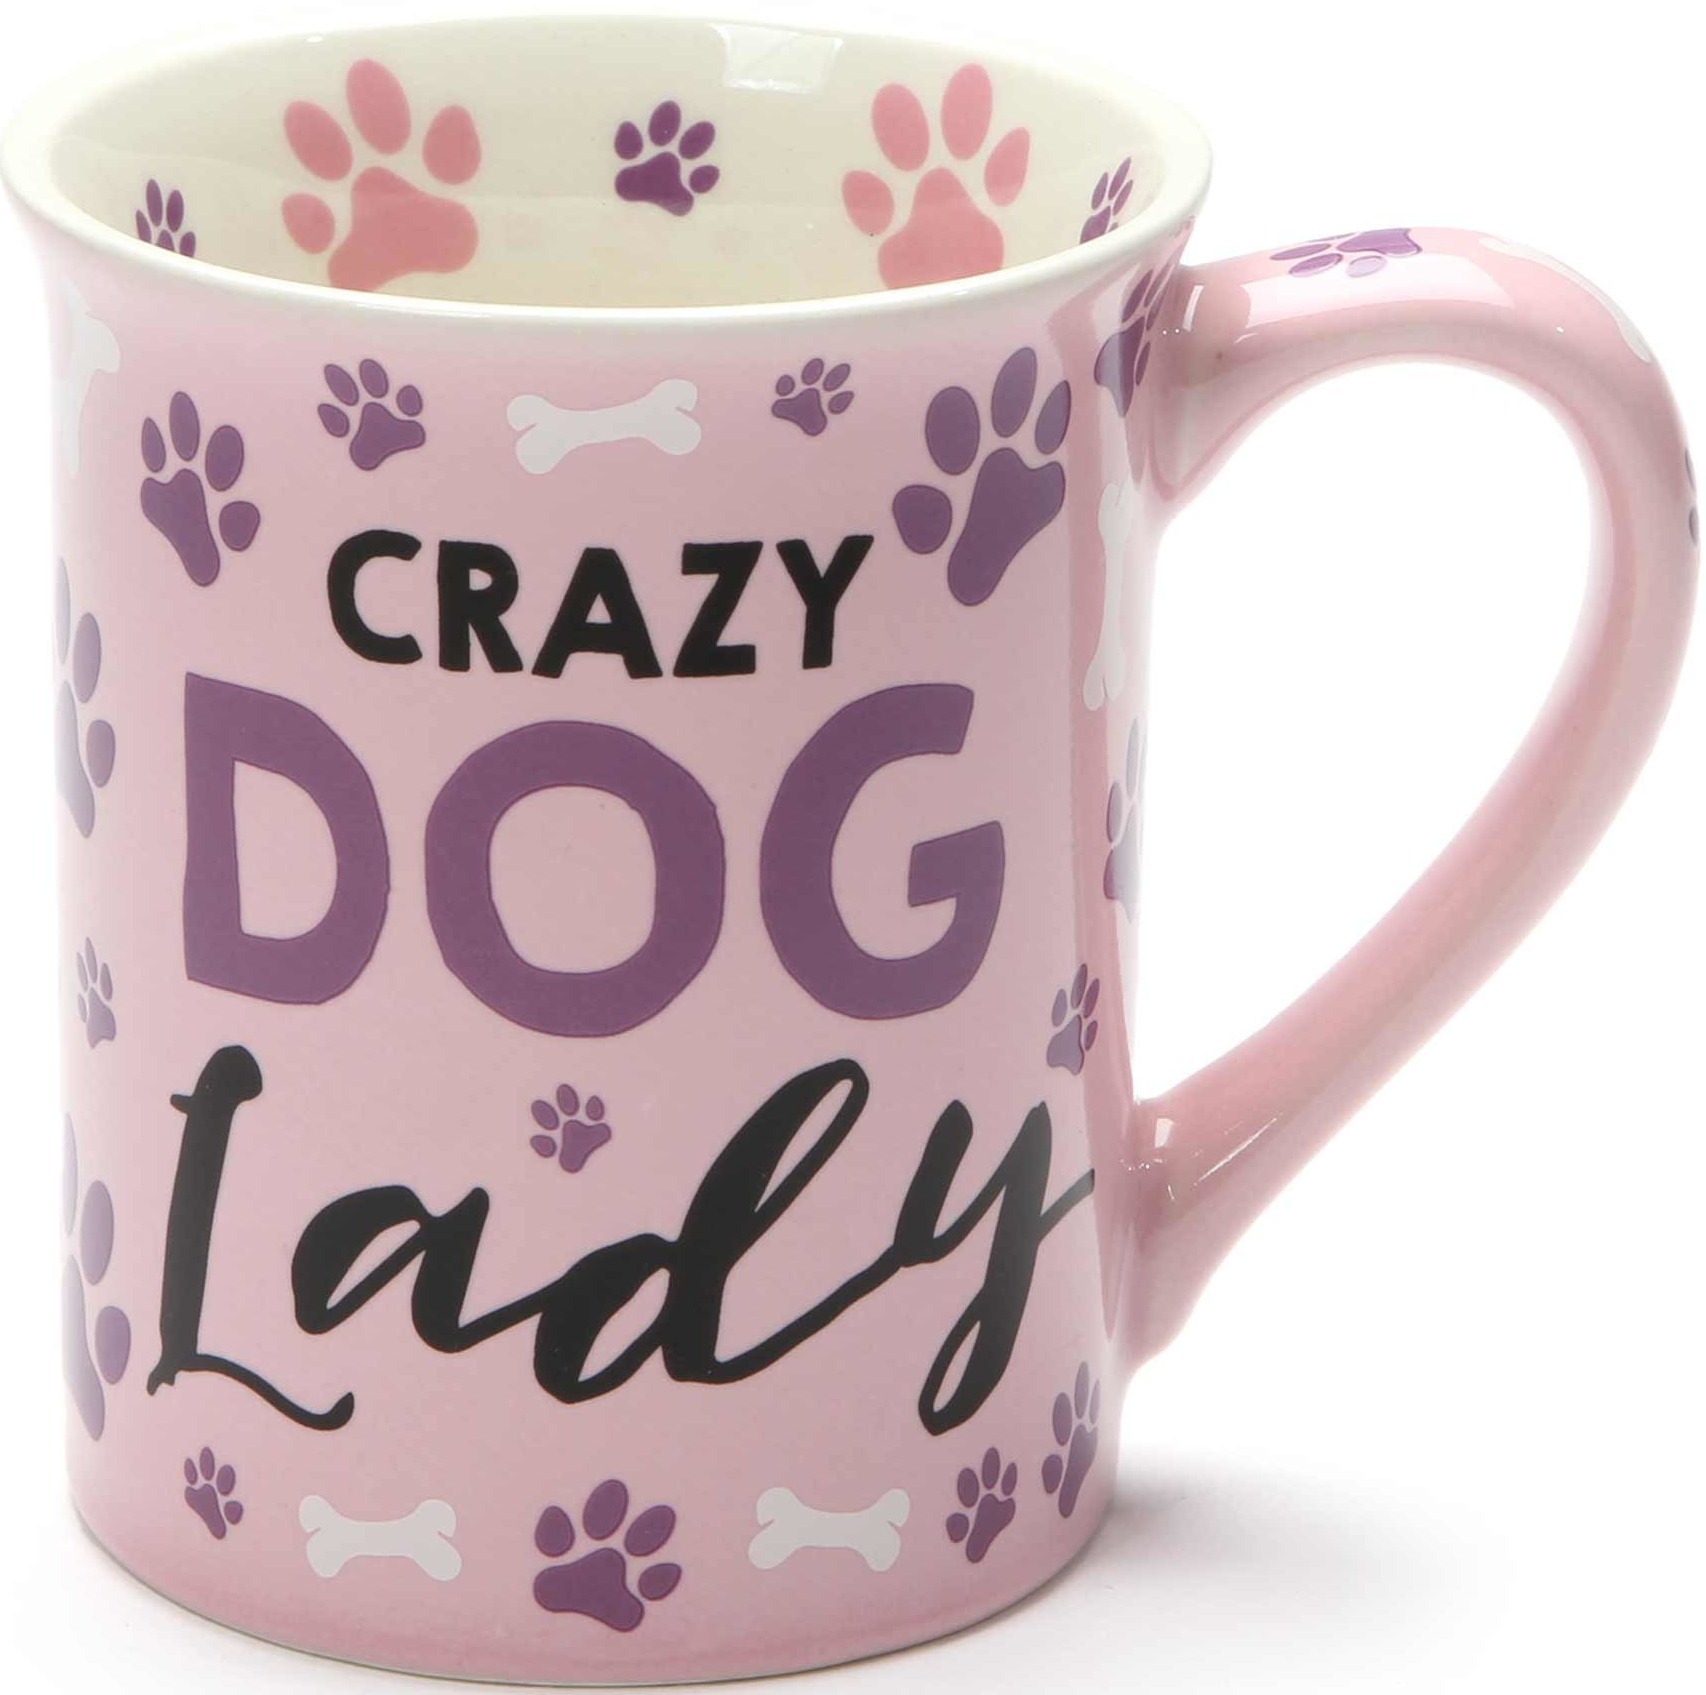 Our Name Is Mud 6001227 Crazy Dog Lady Mug